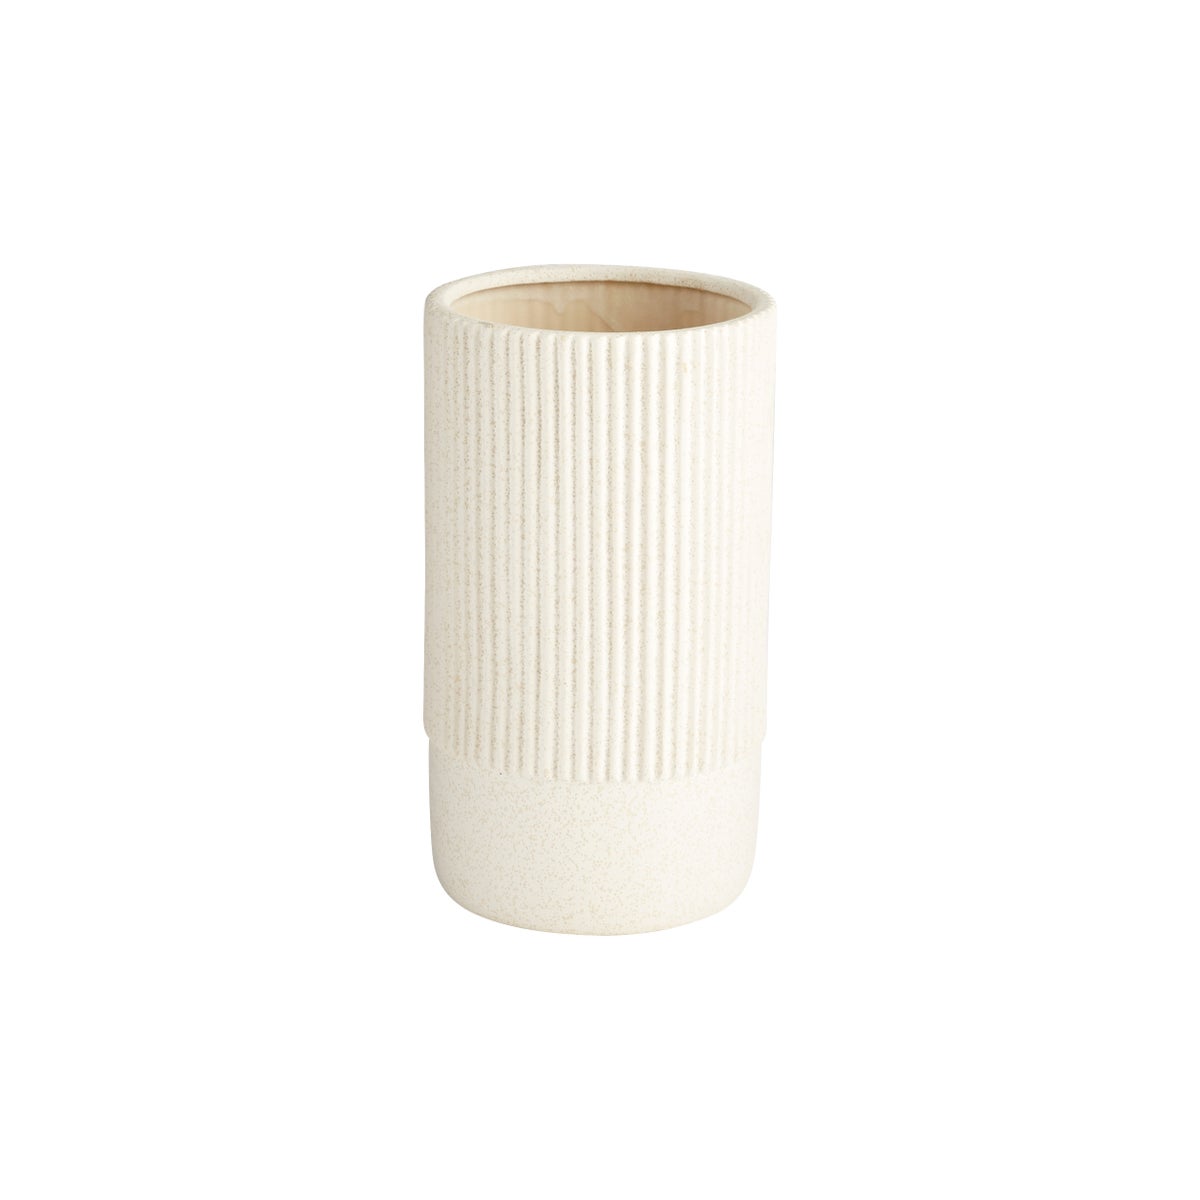 Harmonica Vase | White - Medium